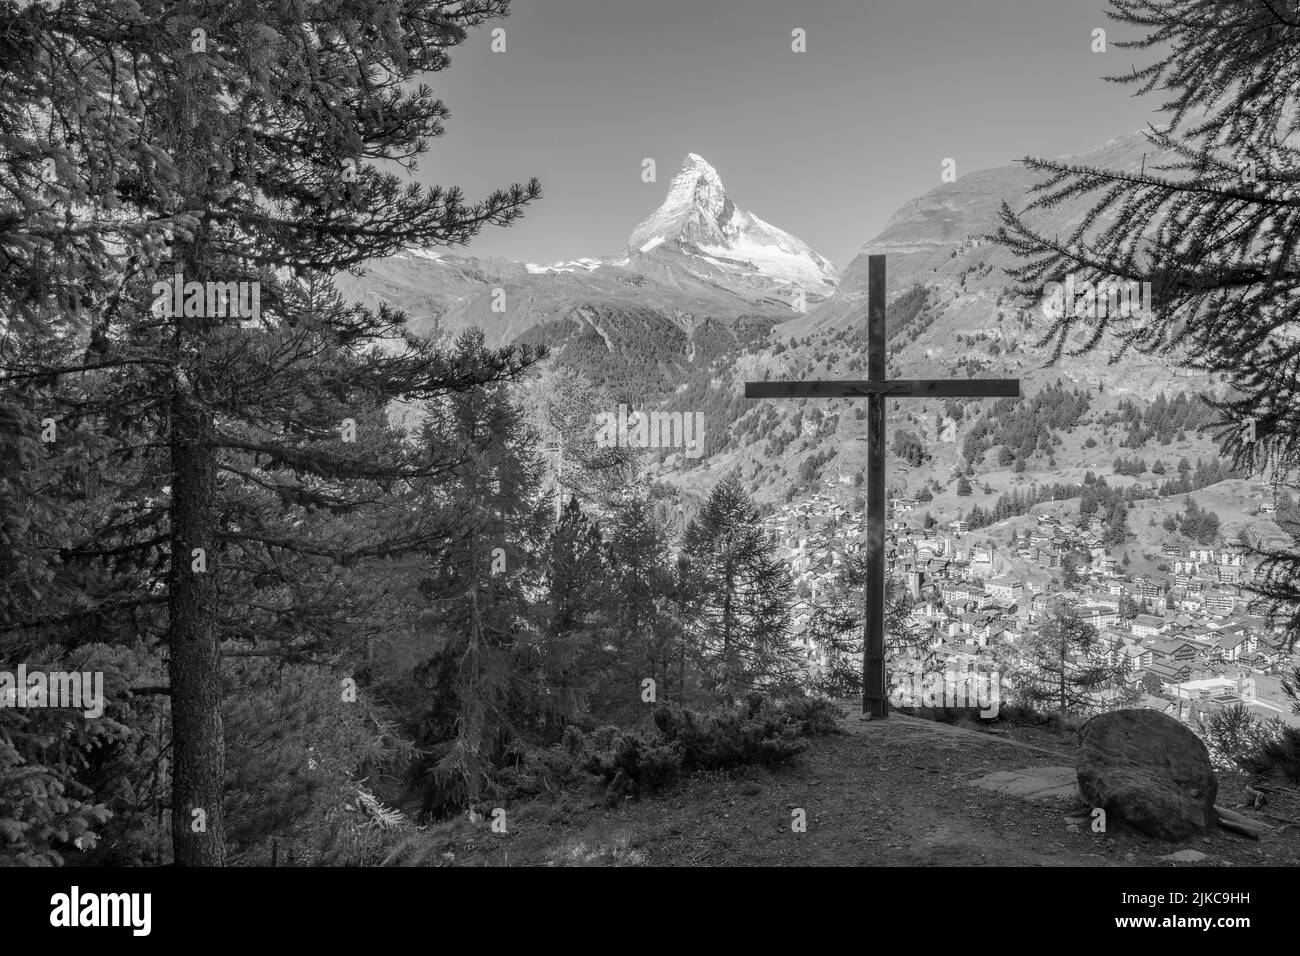 The Matterhorn peak with the cross over the Zermatt. Stock Photo